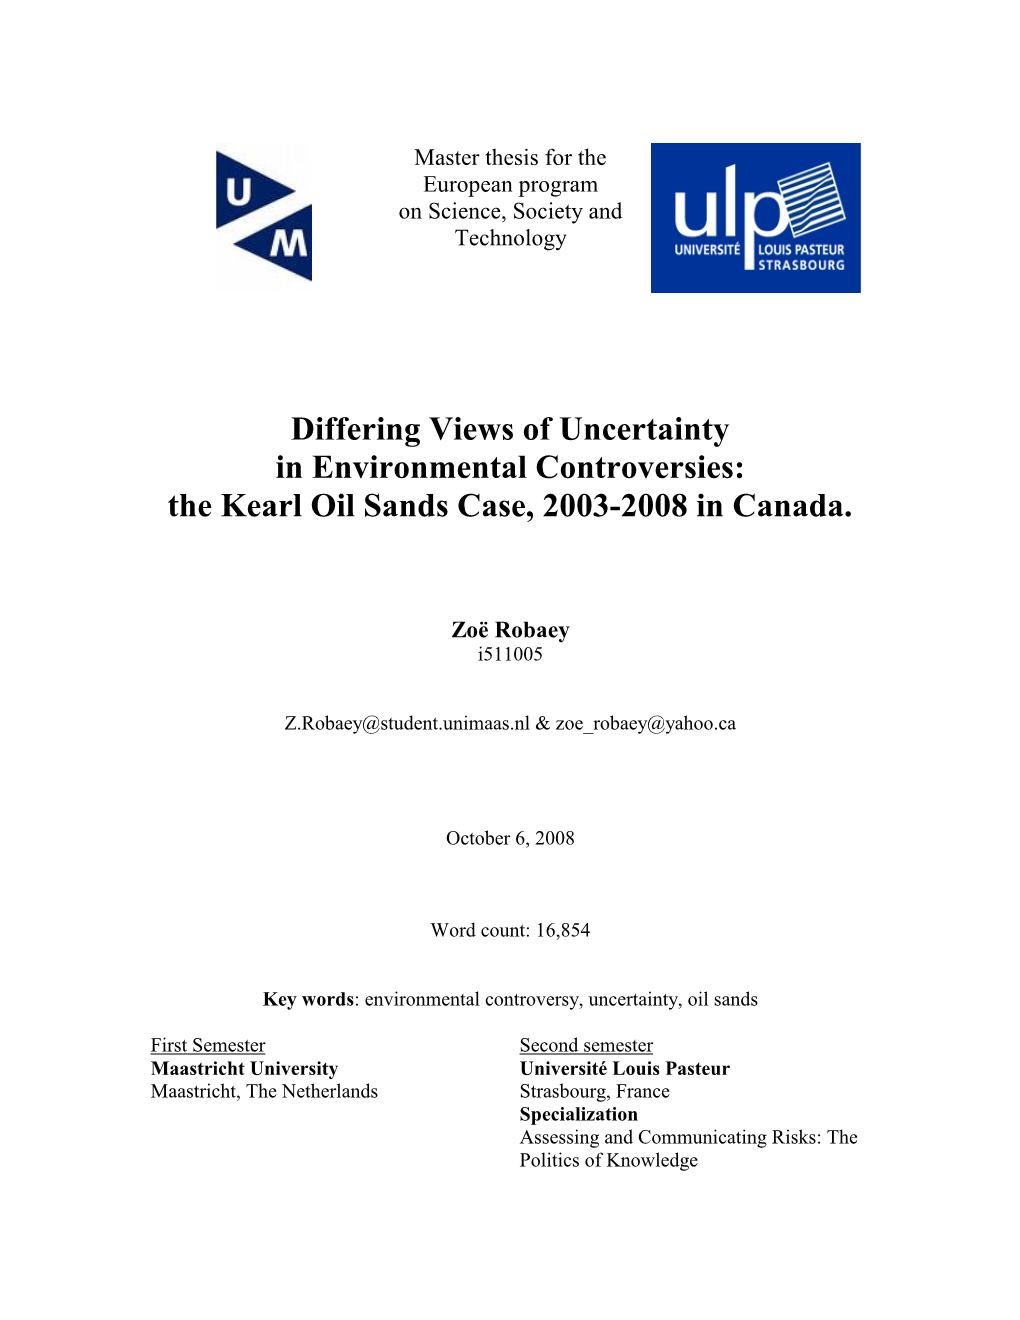 The Kearl Oil Sands Case, 2003-2008 in Canada